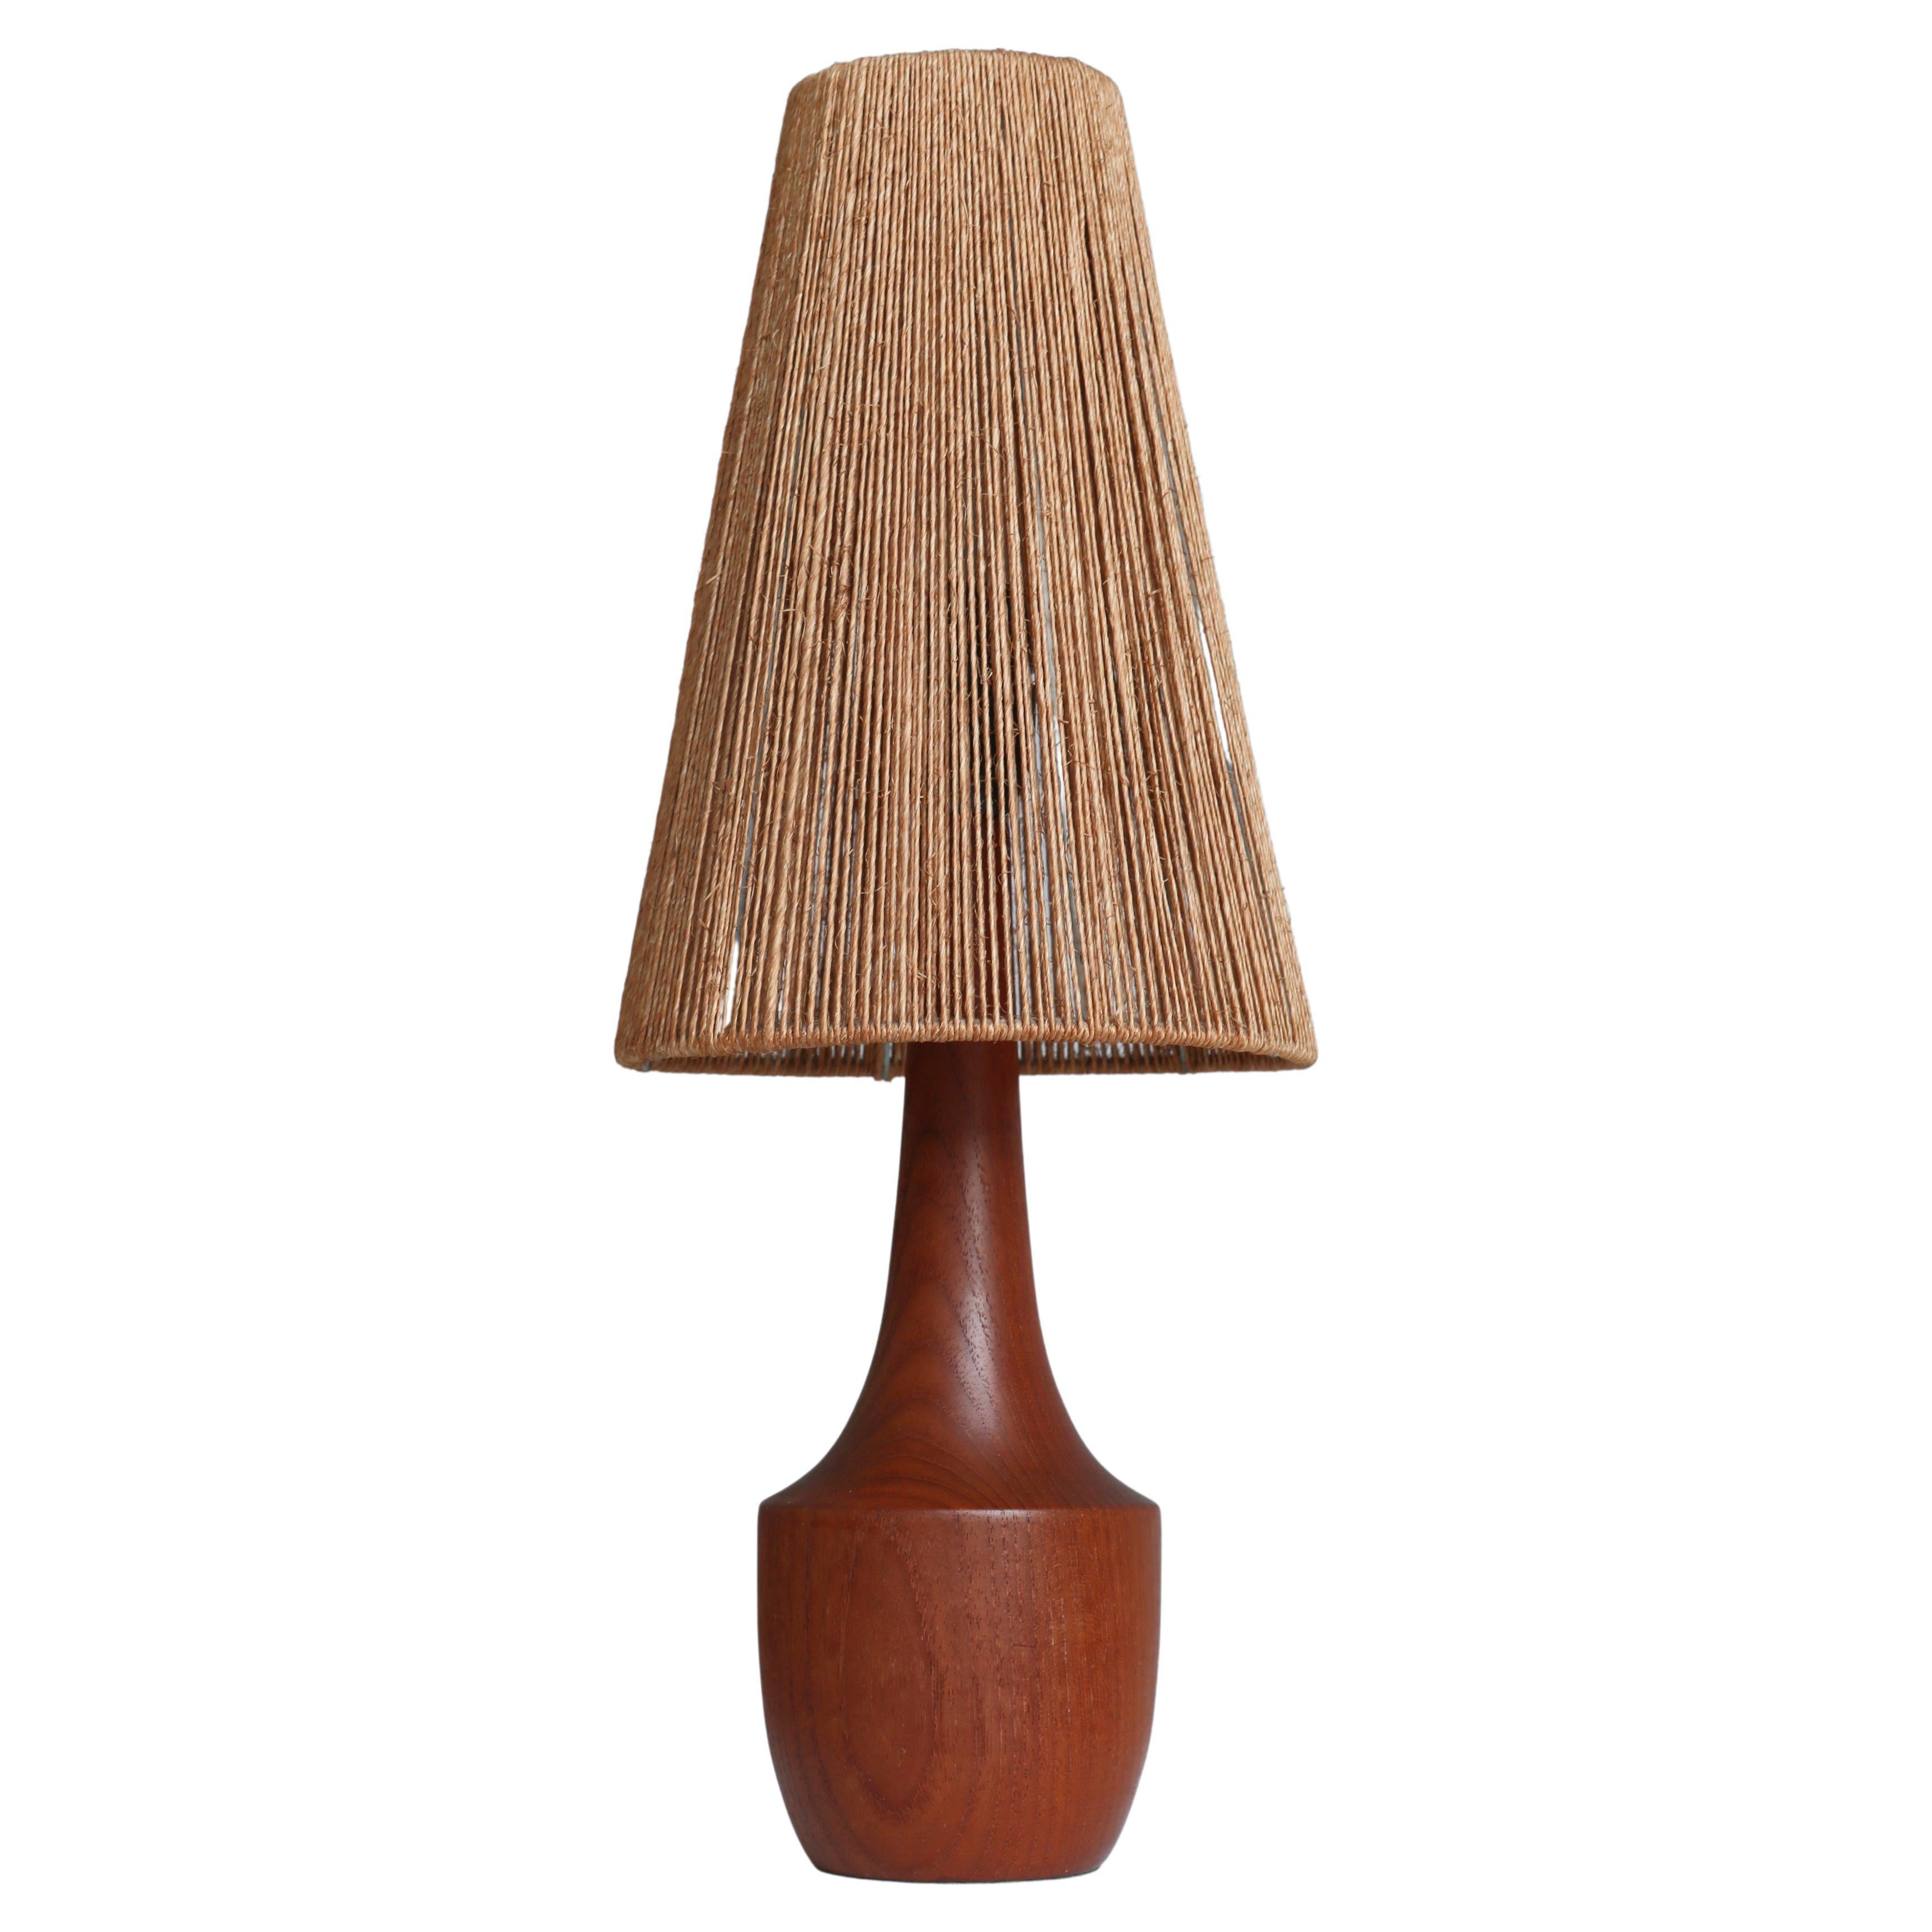 Danish Modern Table Lamp in Turned Teakwood and Sisal, 1950s For Sale